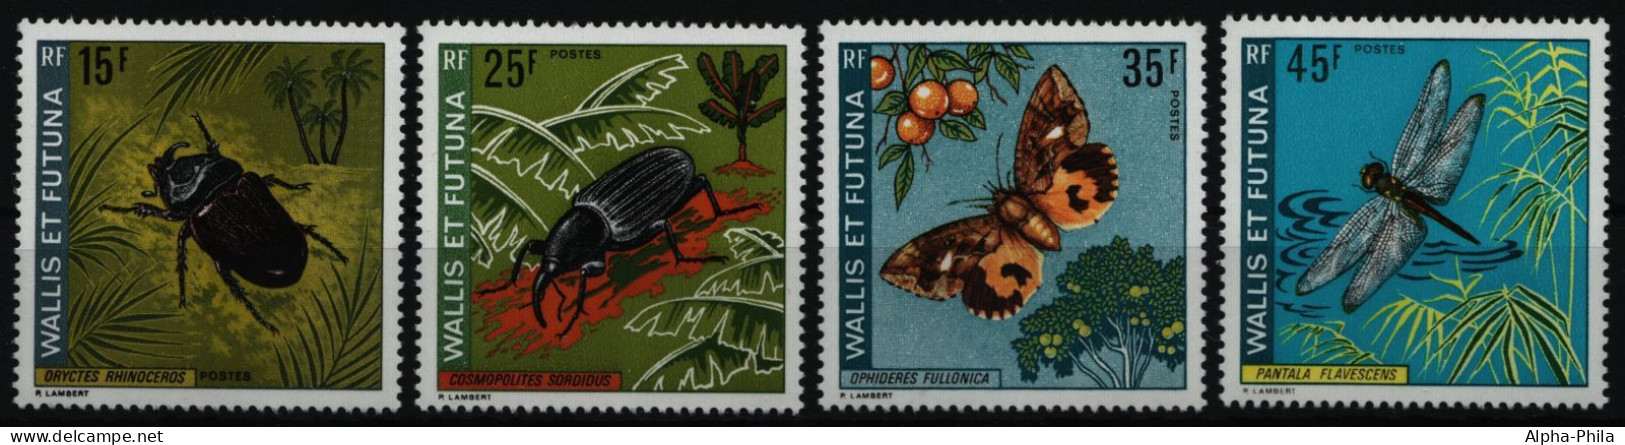 Wallis & Futuna 1974 - Mi-Nr. 254-257 ** - MNH - Insekten / Insects - Ongebruikt